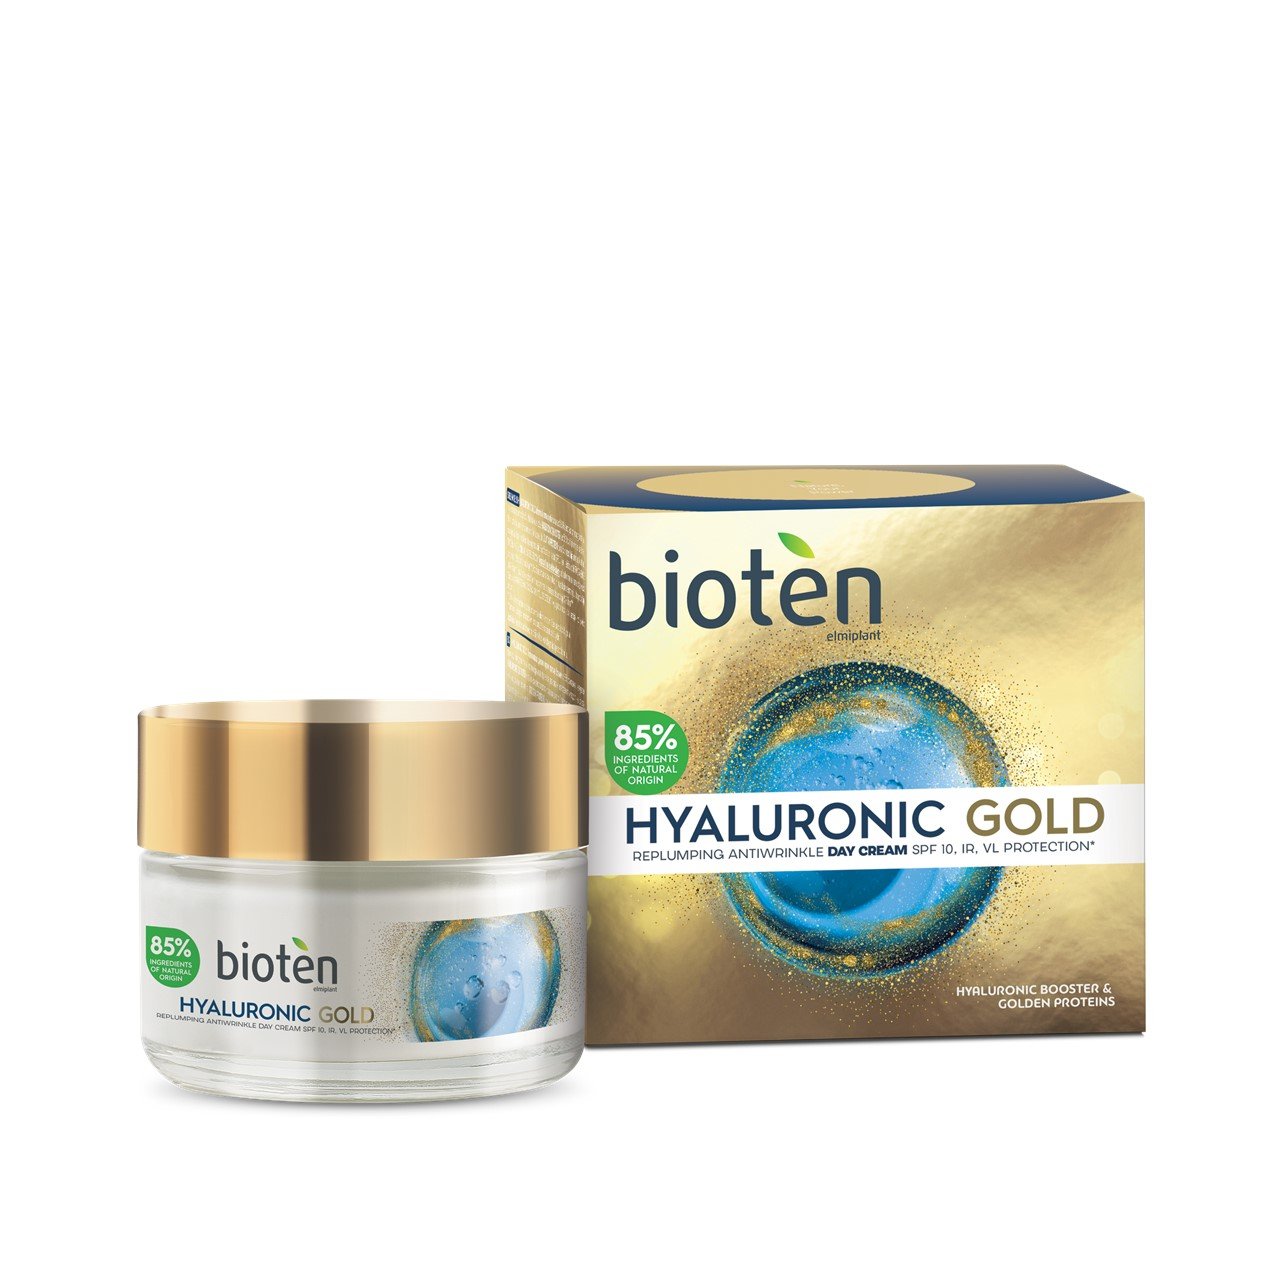 bioten Hyaluronic Gold Day Cream SPF10 50ml (1.69fl oz)